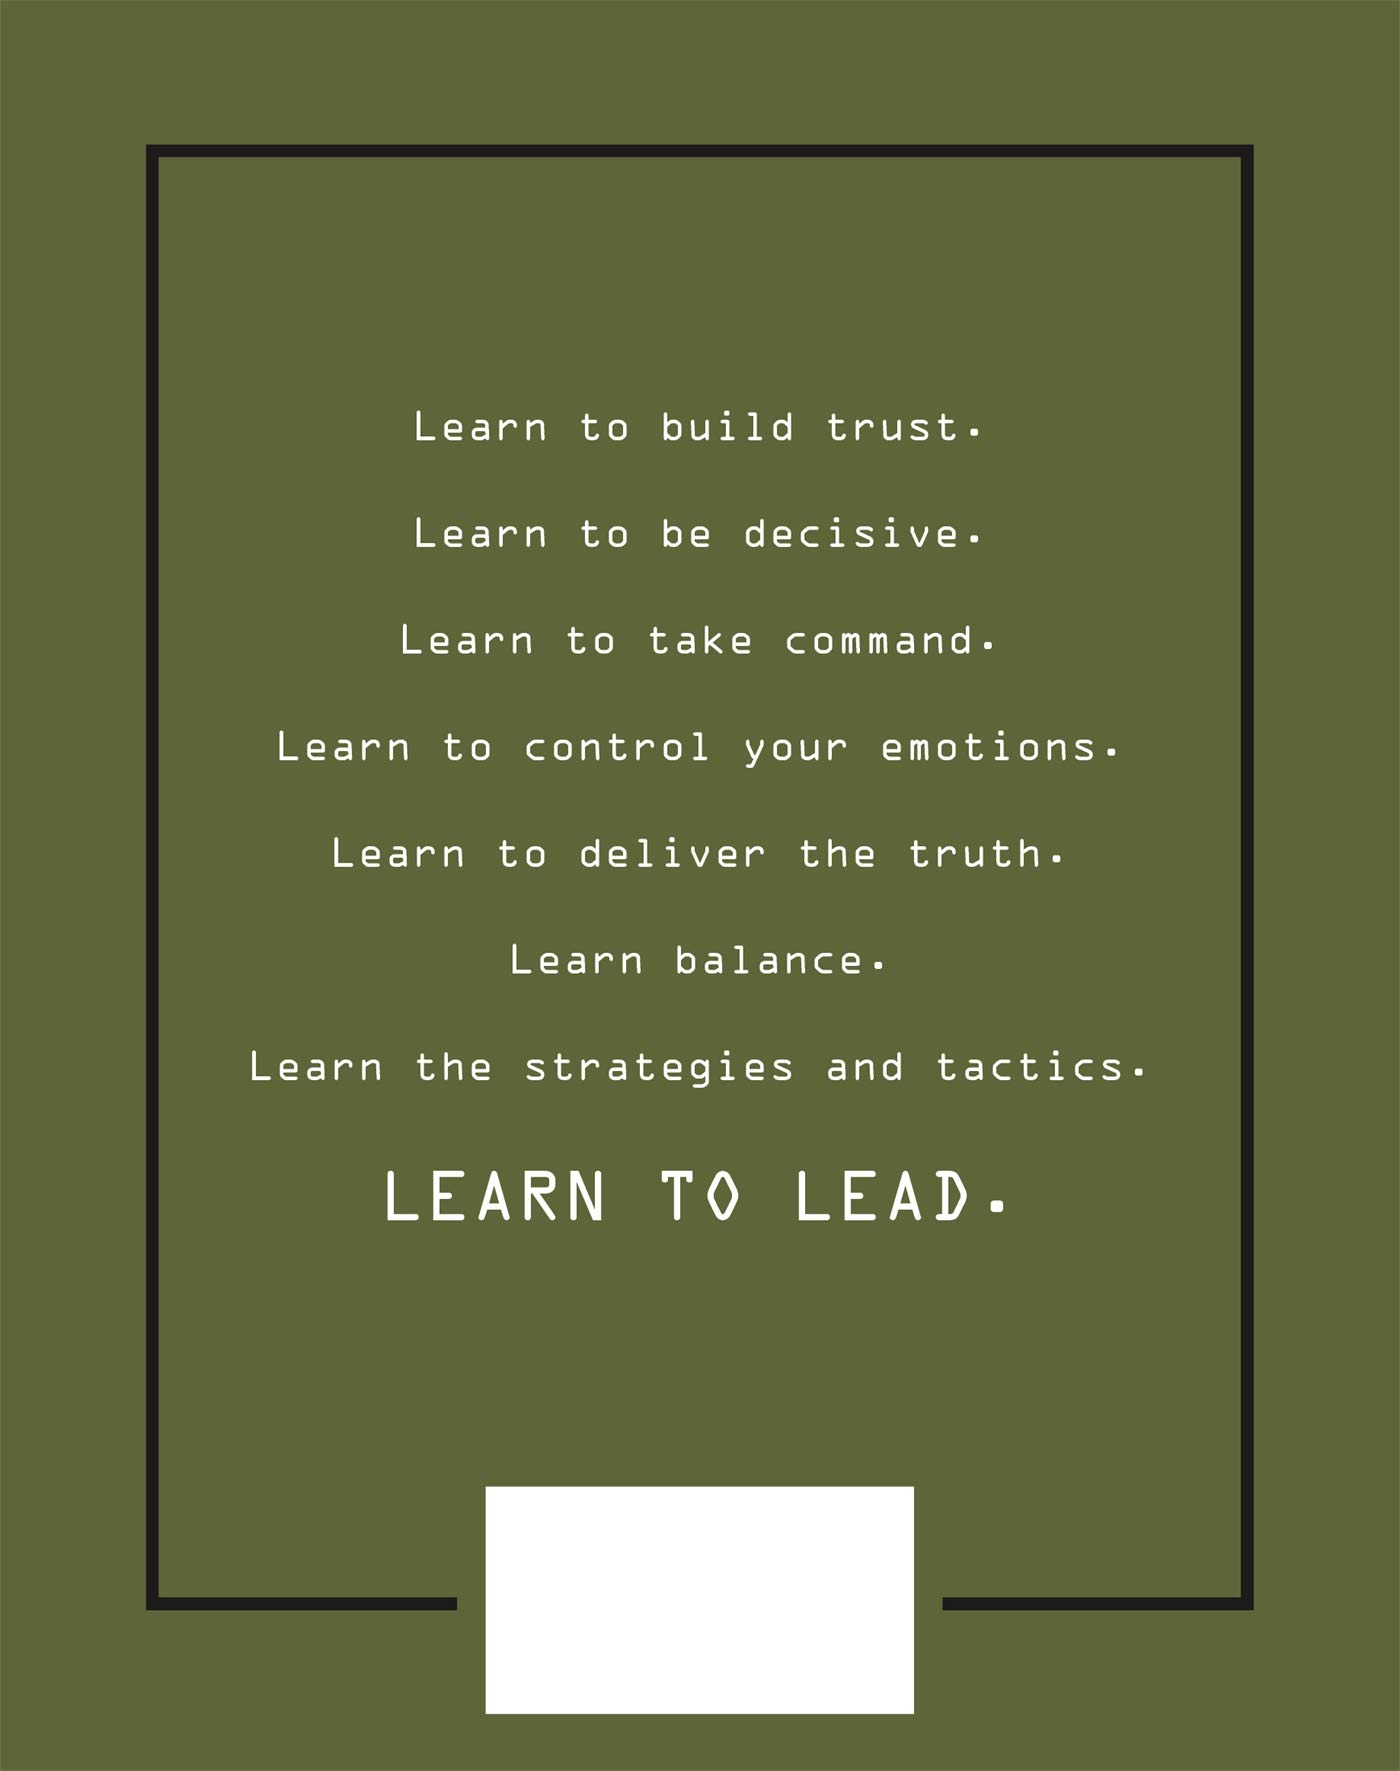 Leadership Strategy and Tactics: Field Manual